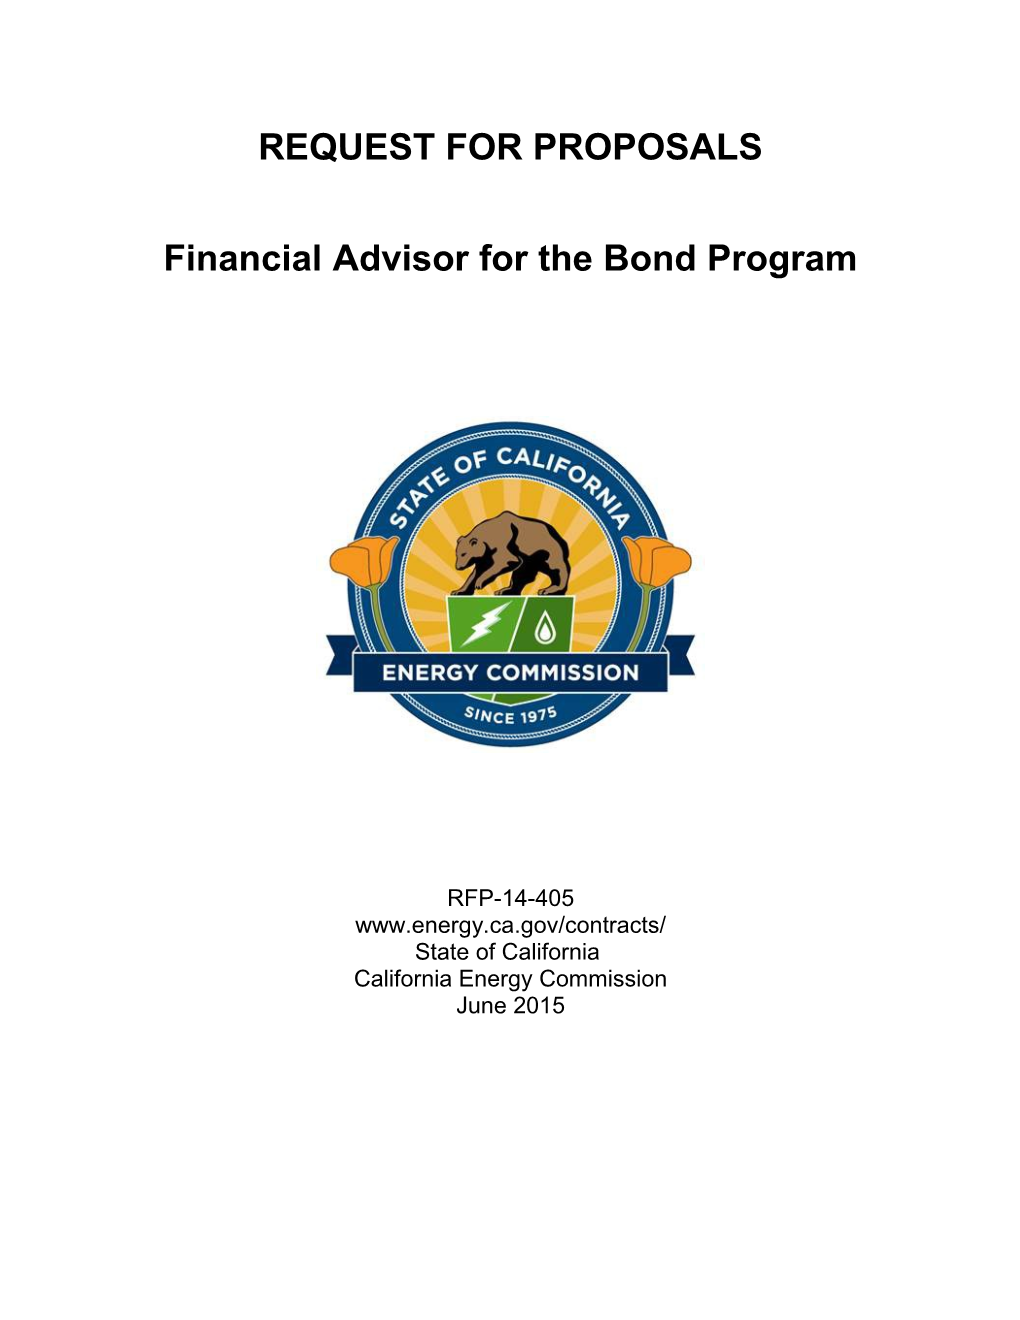 Request for Proposals RFP-14-405 Financial Advisor for the Bond Program